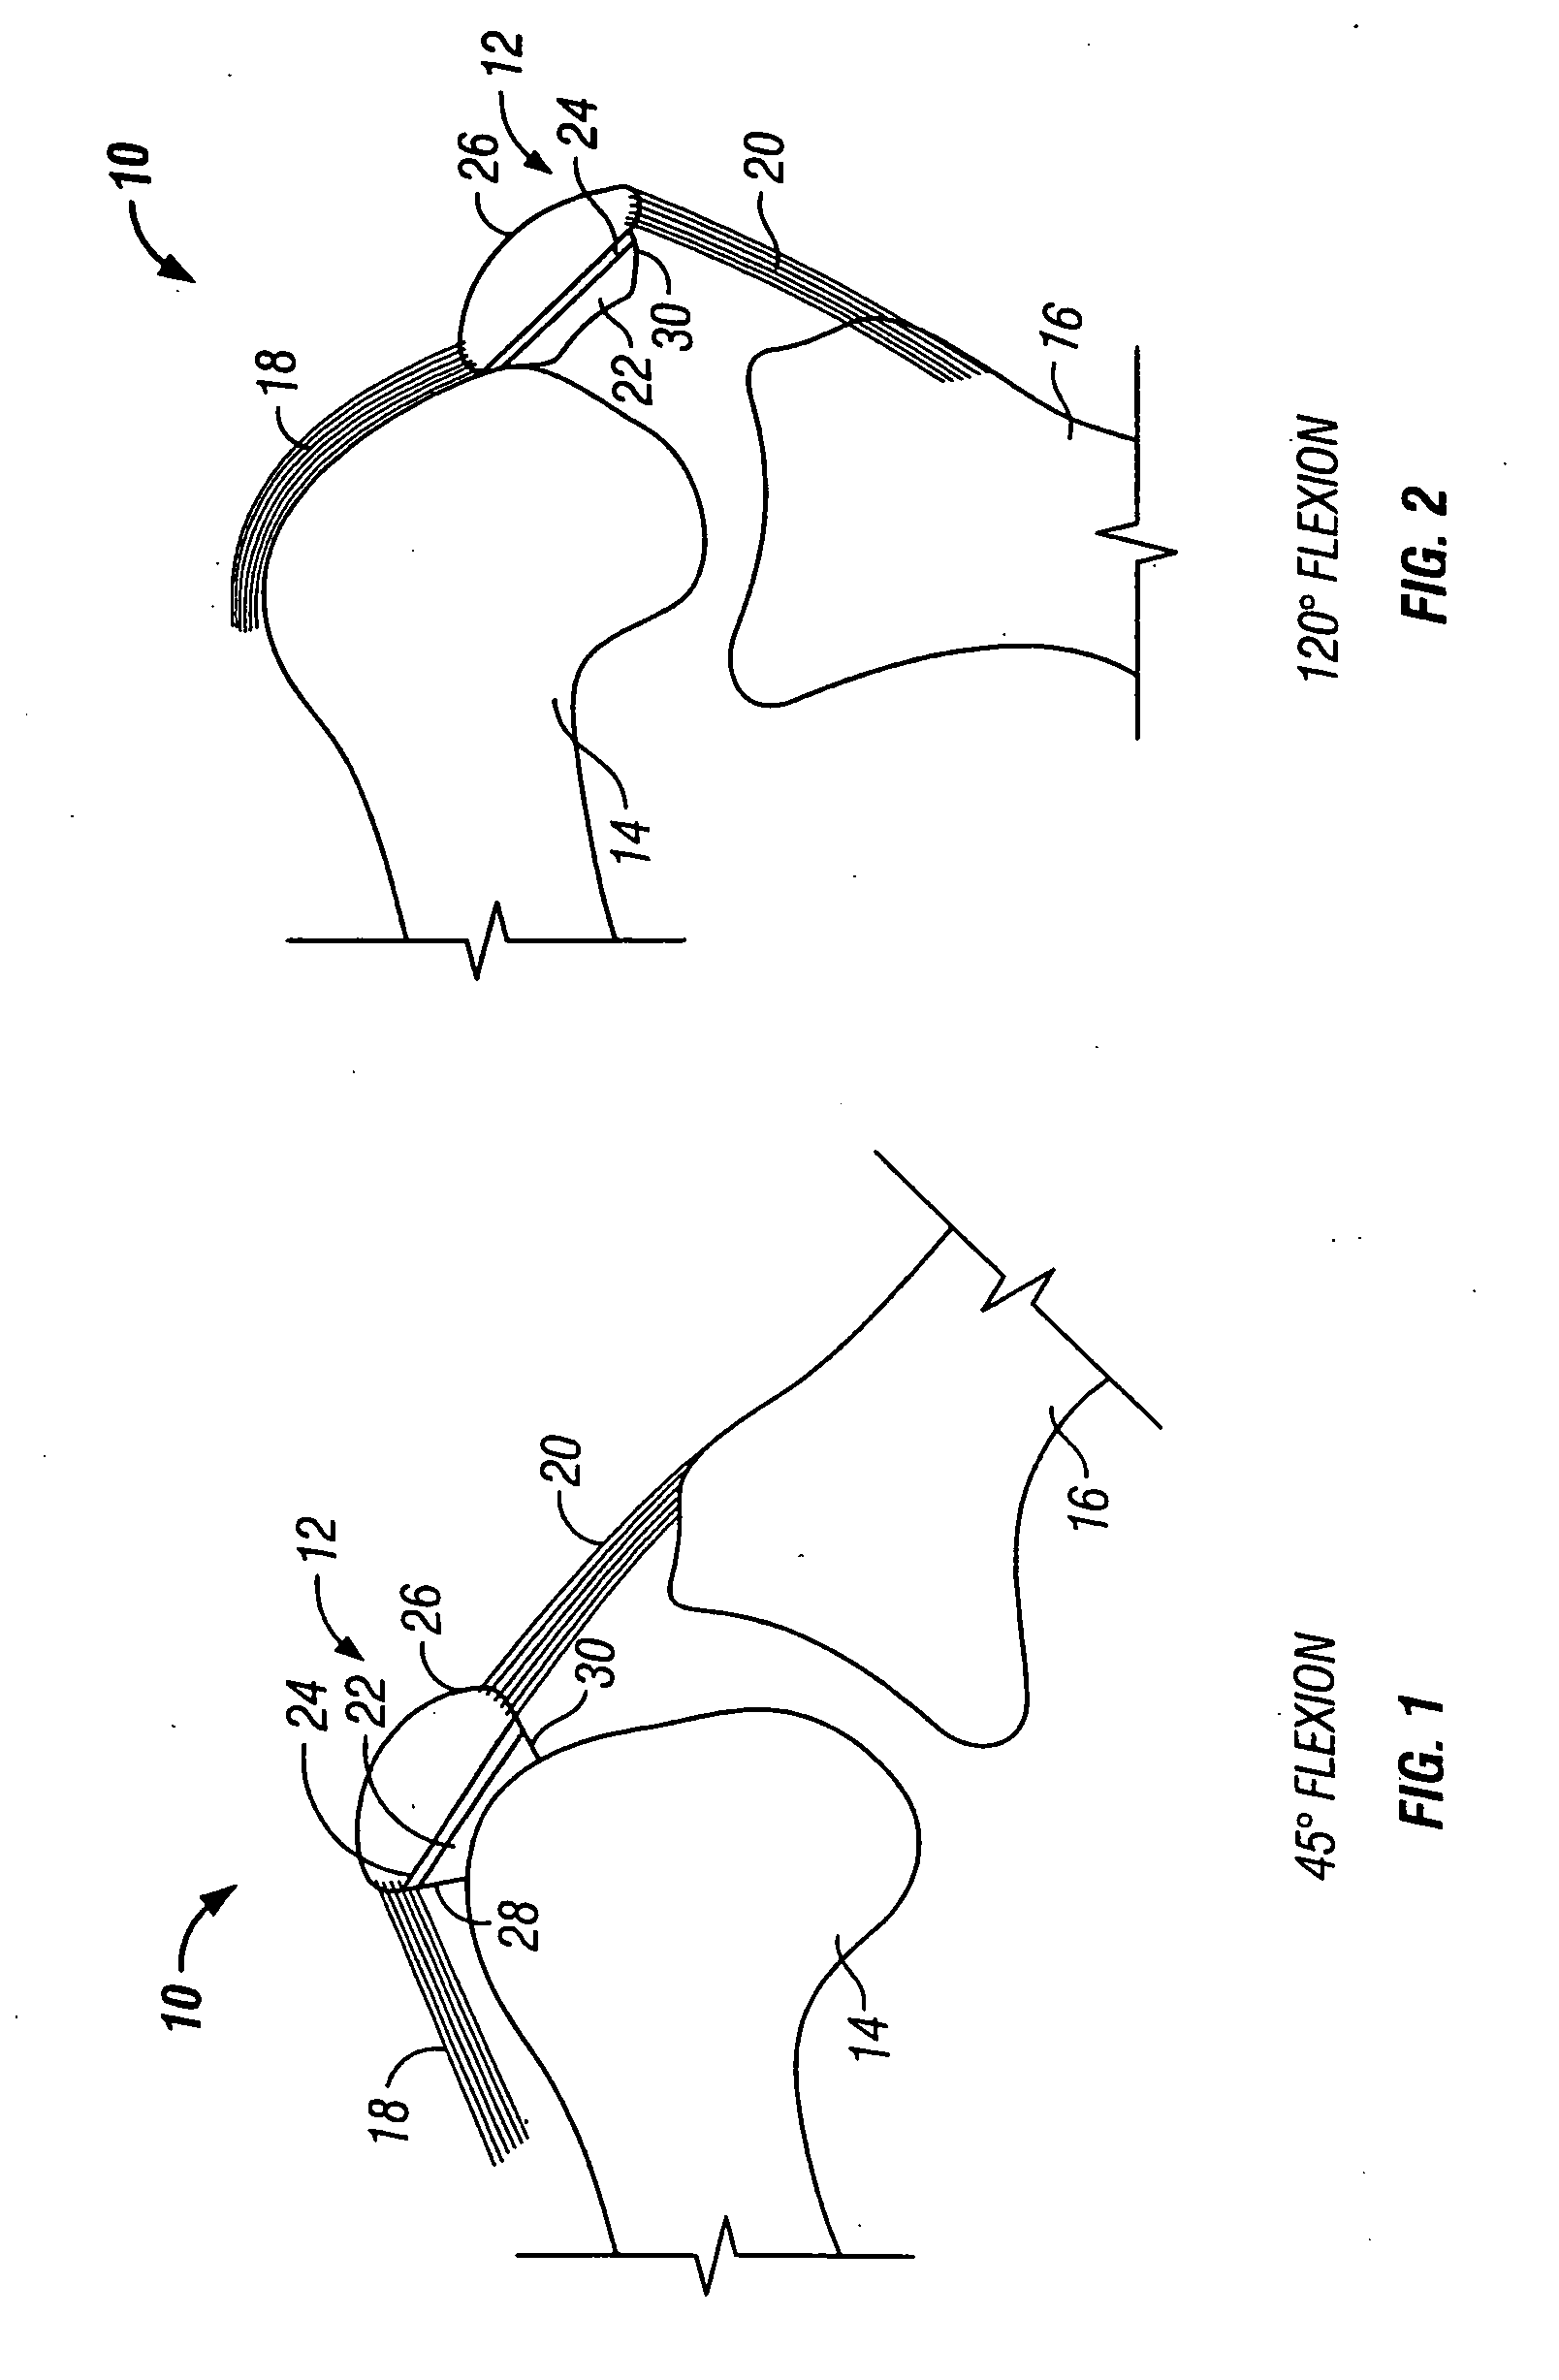 Patellar prosthetic arrangement and associated surgical method